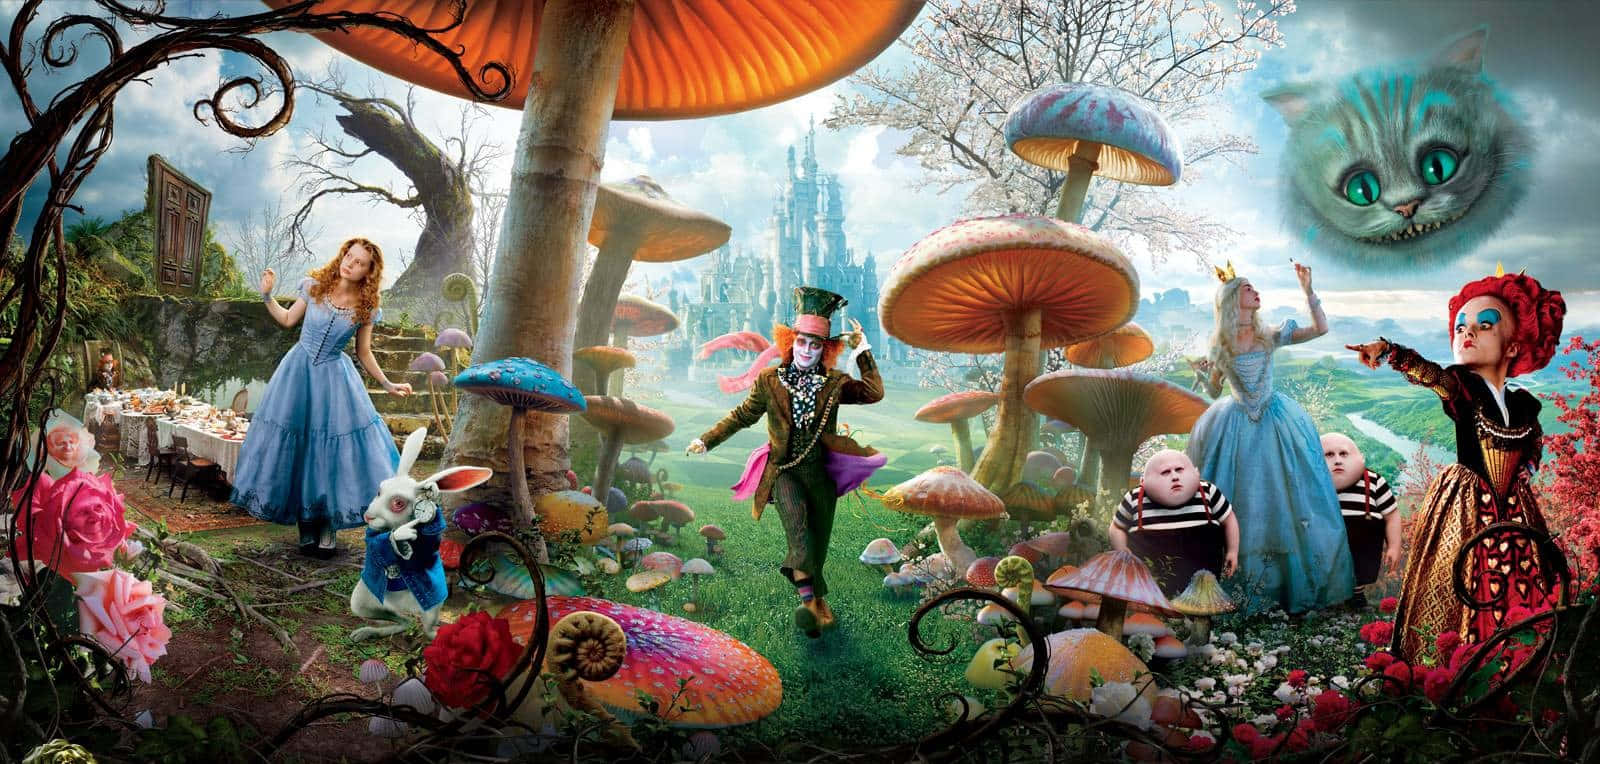 Alice entering the magical world of Wonderland